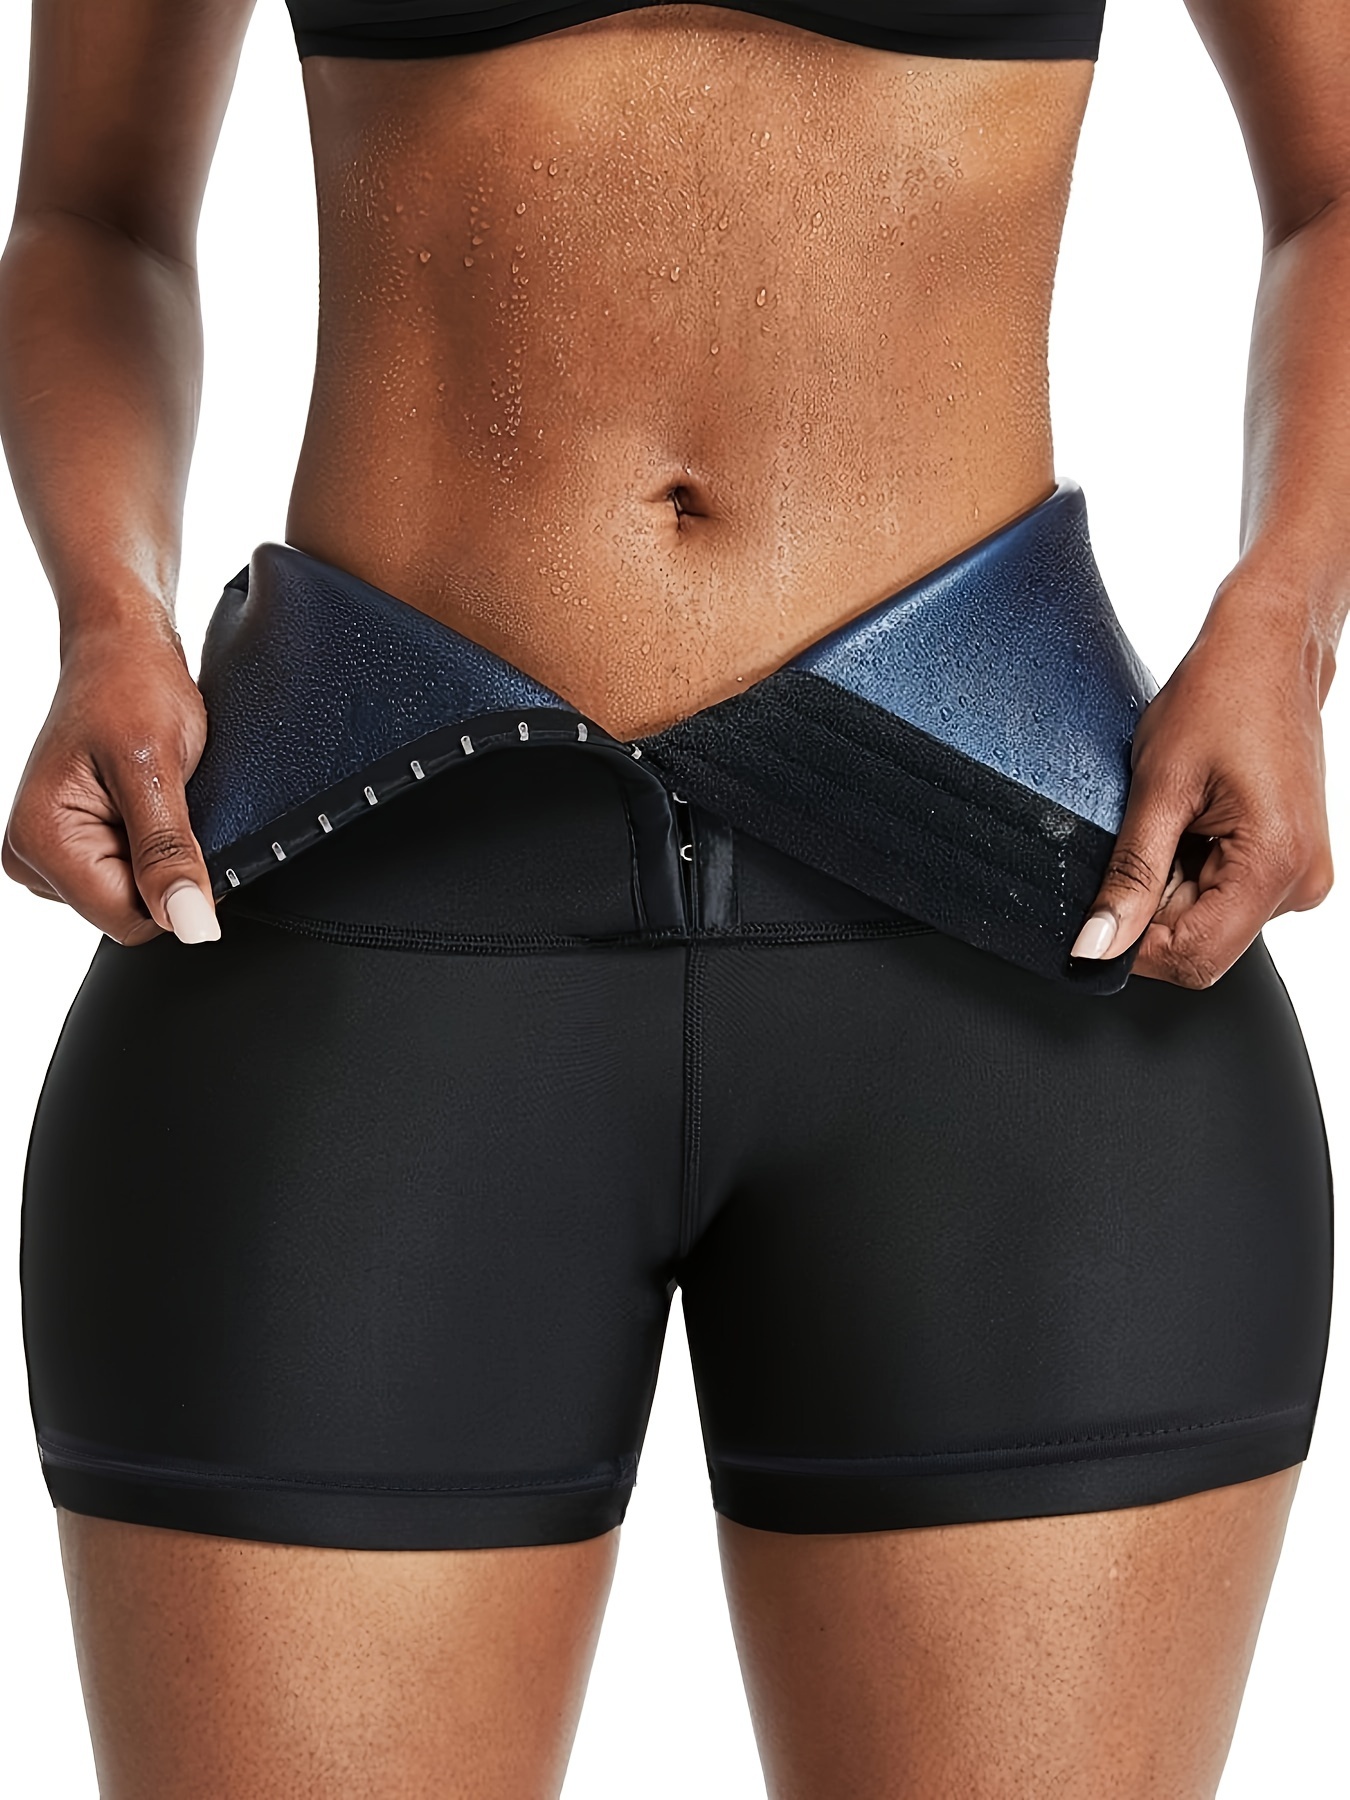 Double Compression Body Fajas Shorts Calzon Faja Abdomen Mujer Panties With  Abdominal Tightening Bragas Reductoras Abdomen